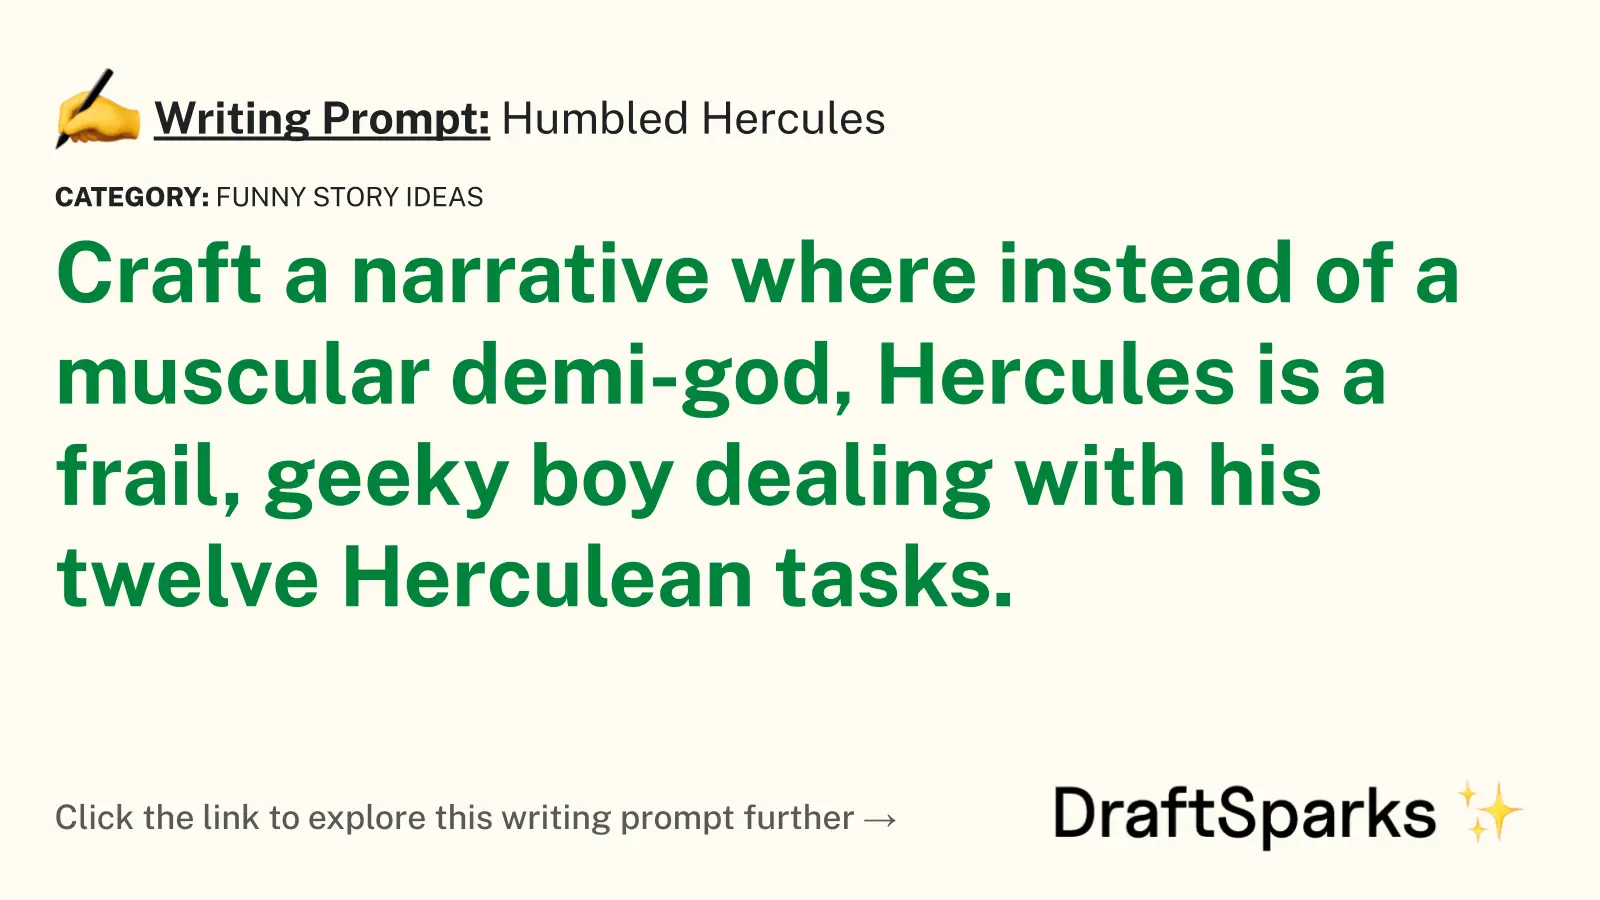 Humbled Hercules